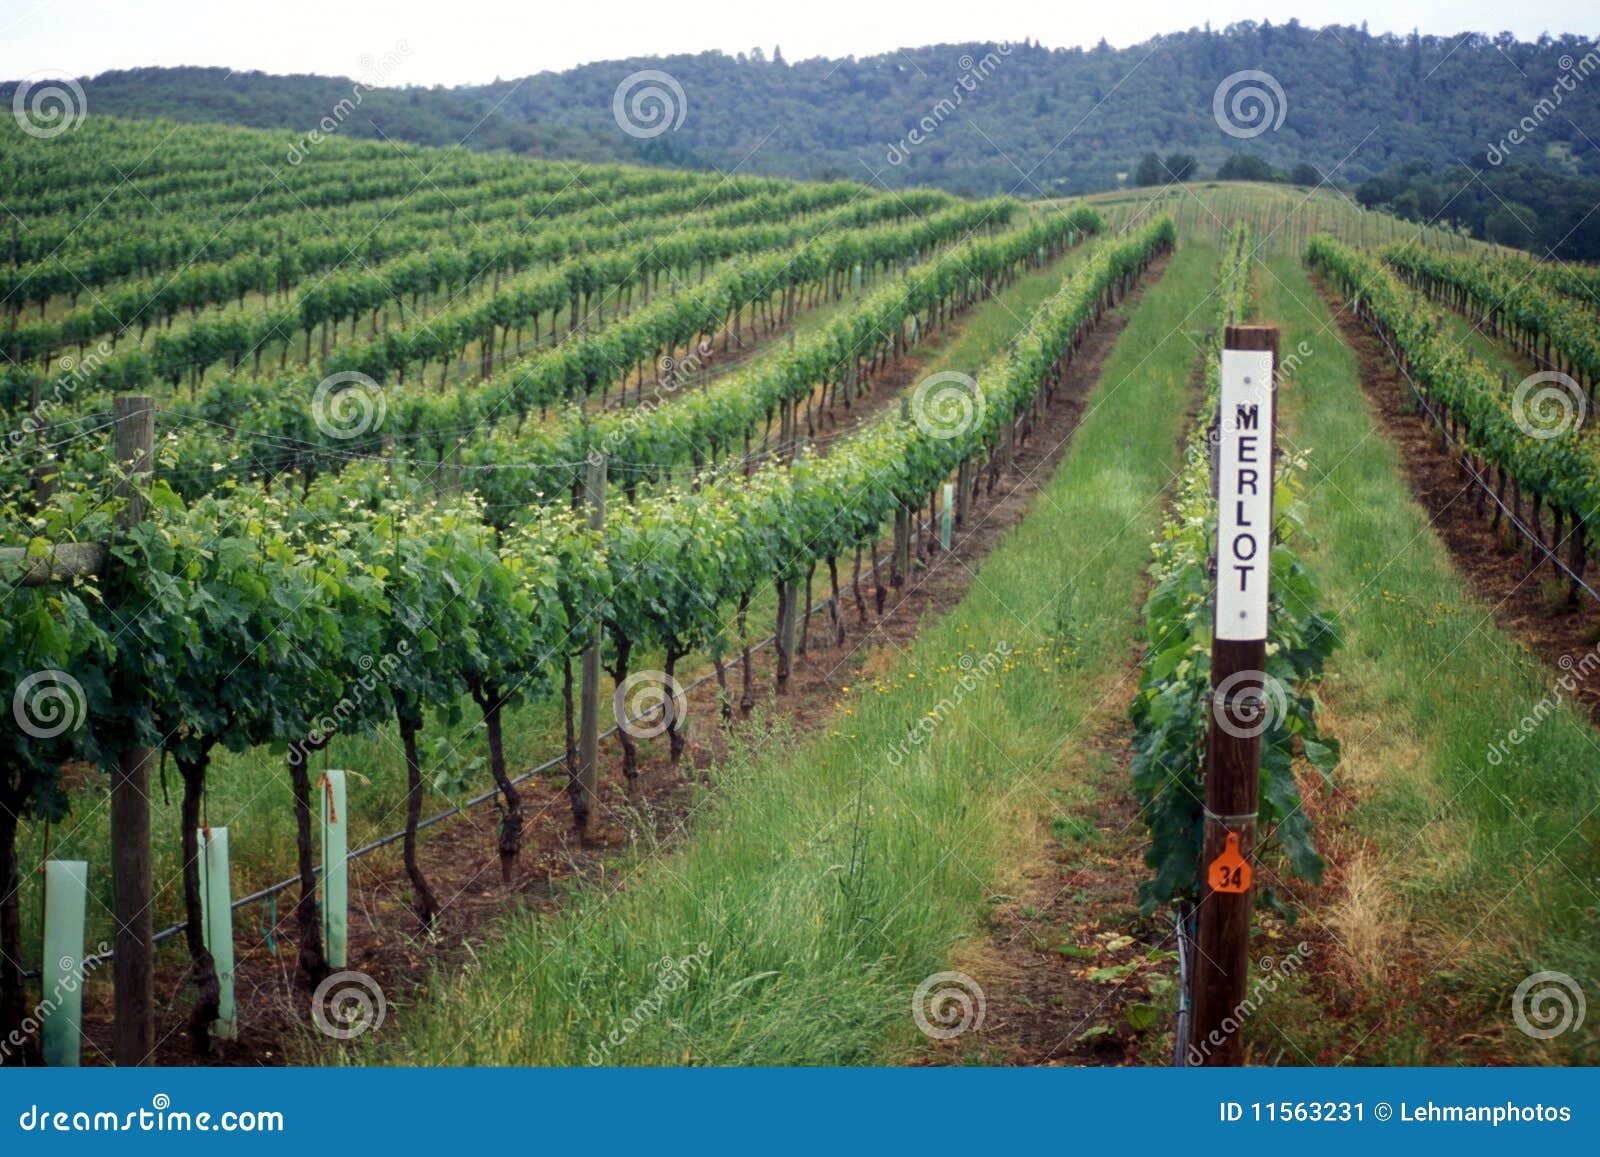 wine country vineyard landscape merlot sign